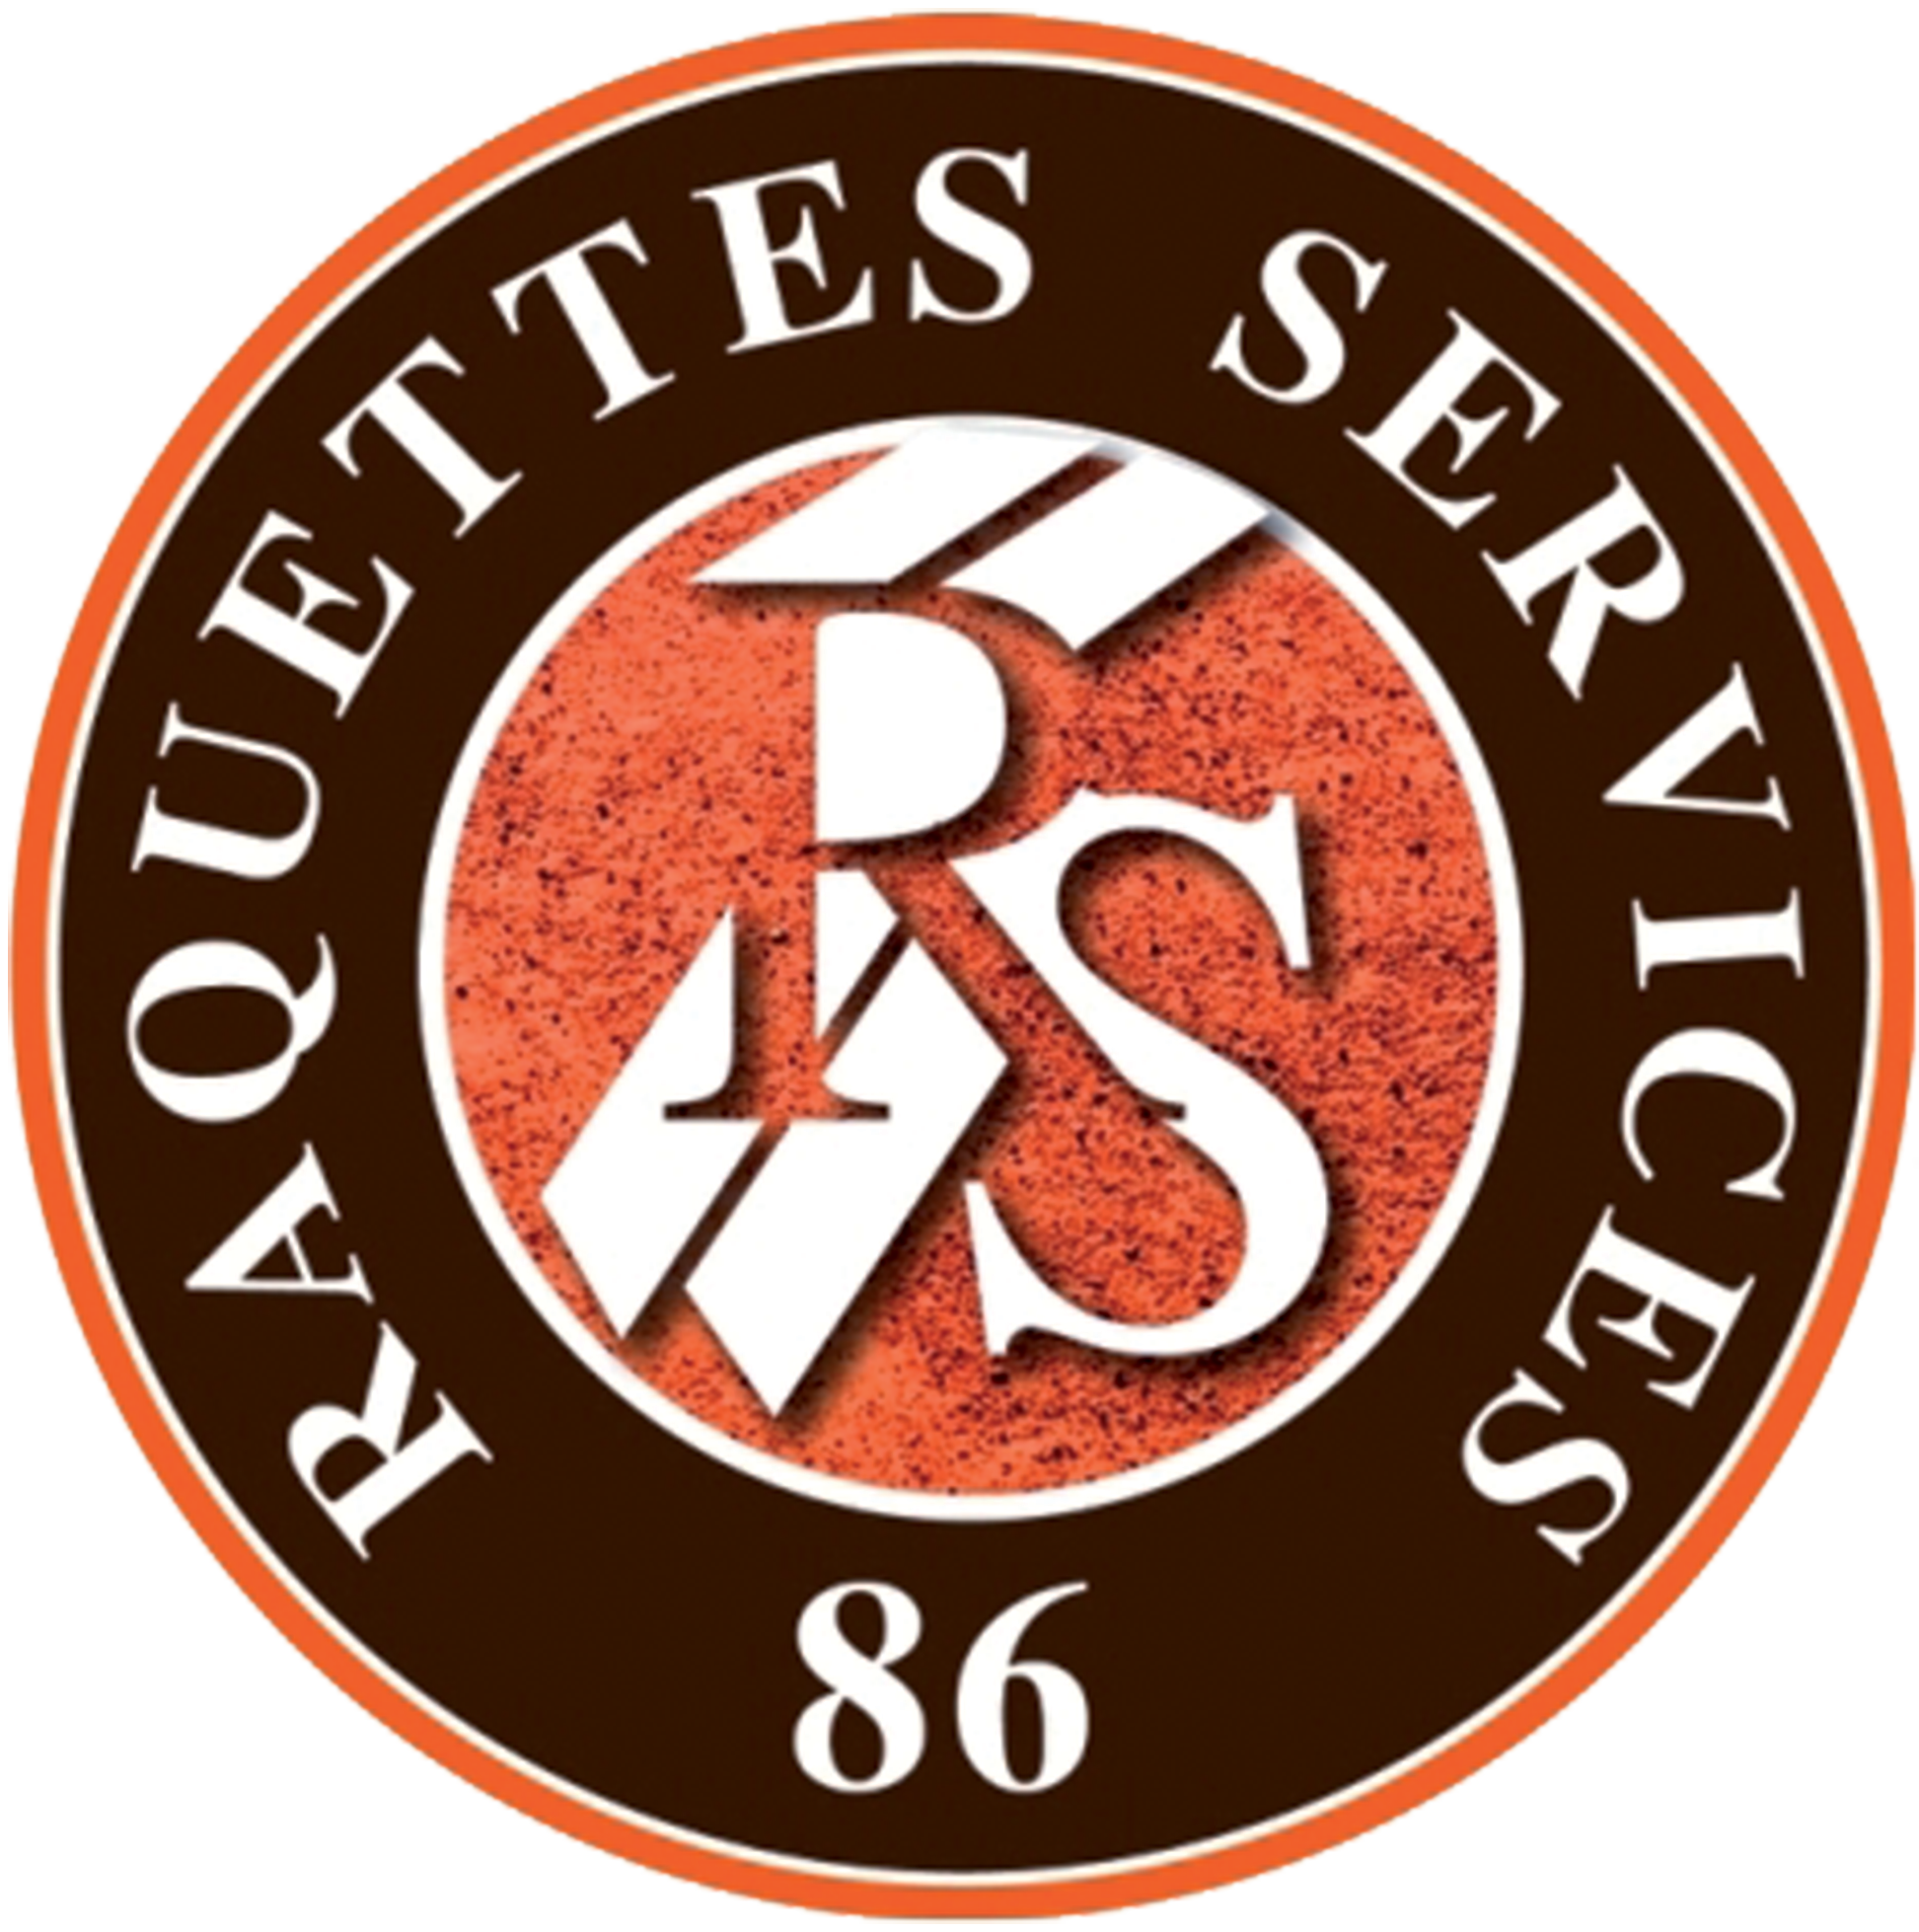 Raquette_Service86_logo1_IMPORT.png